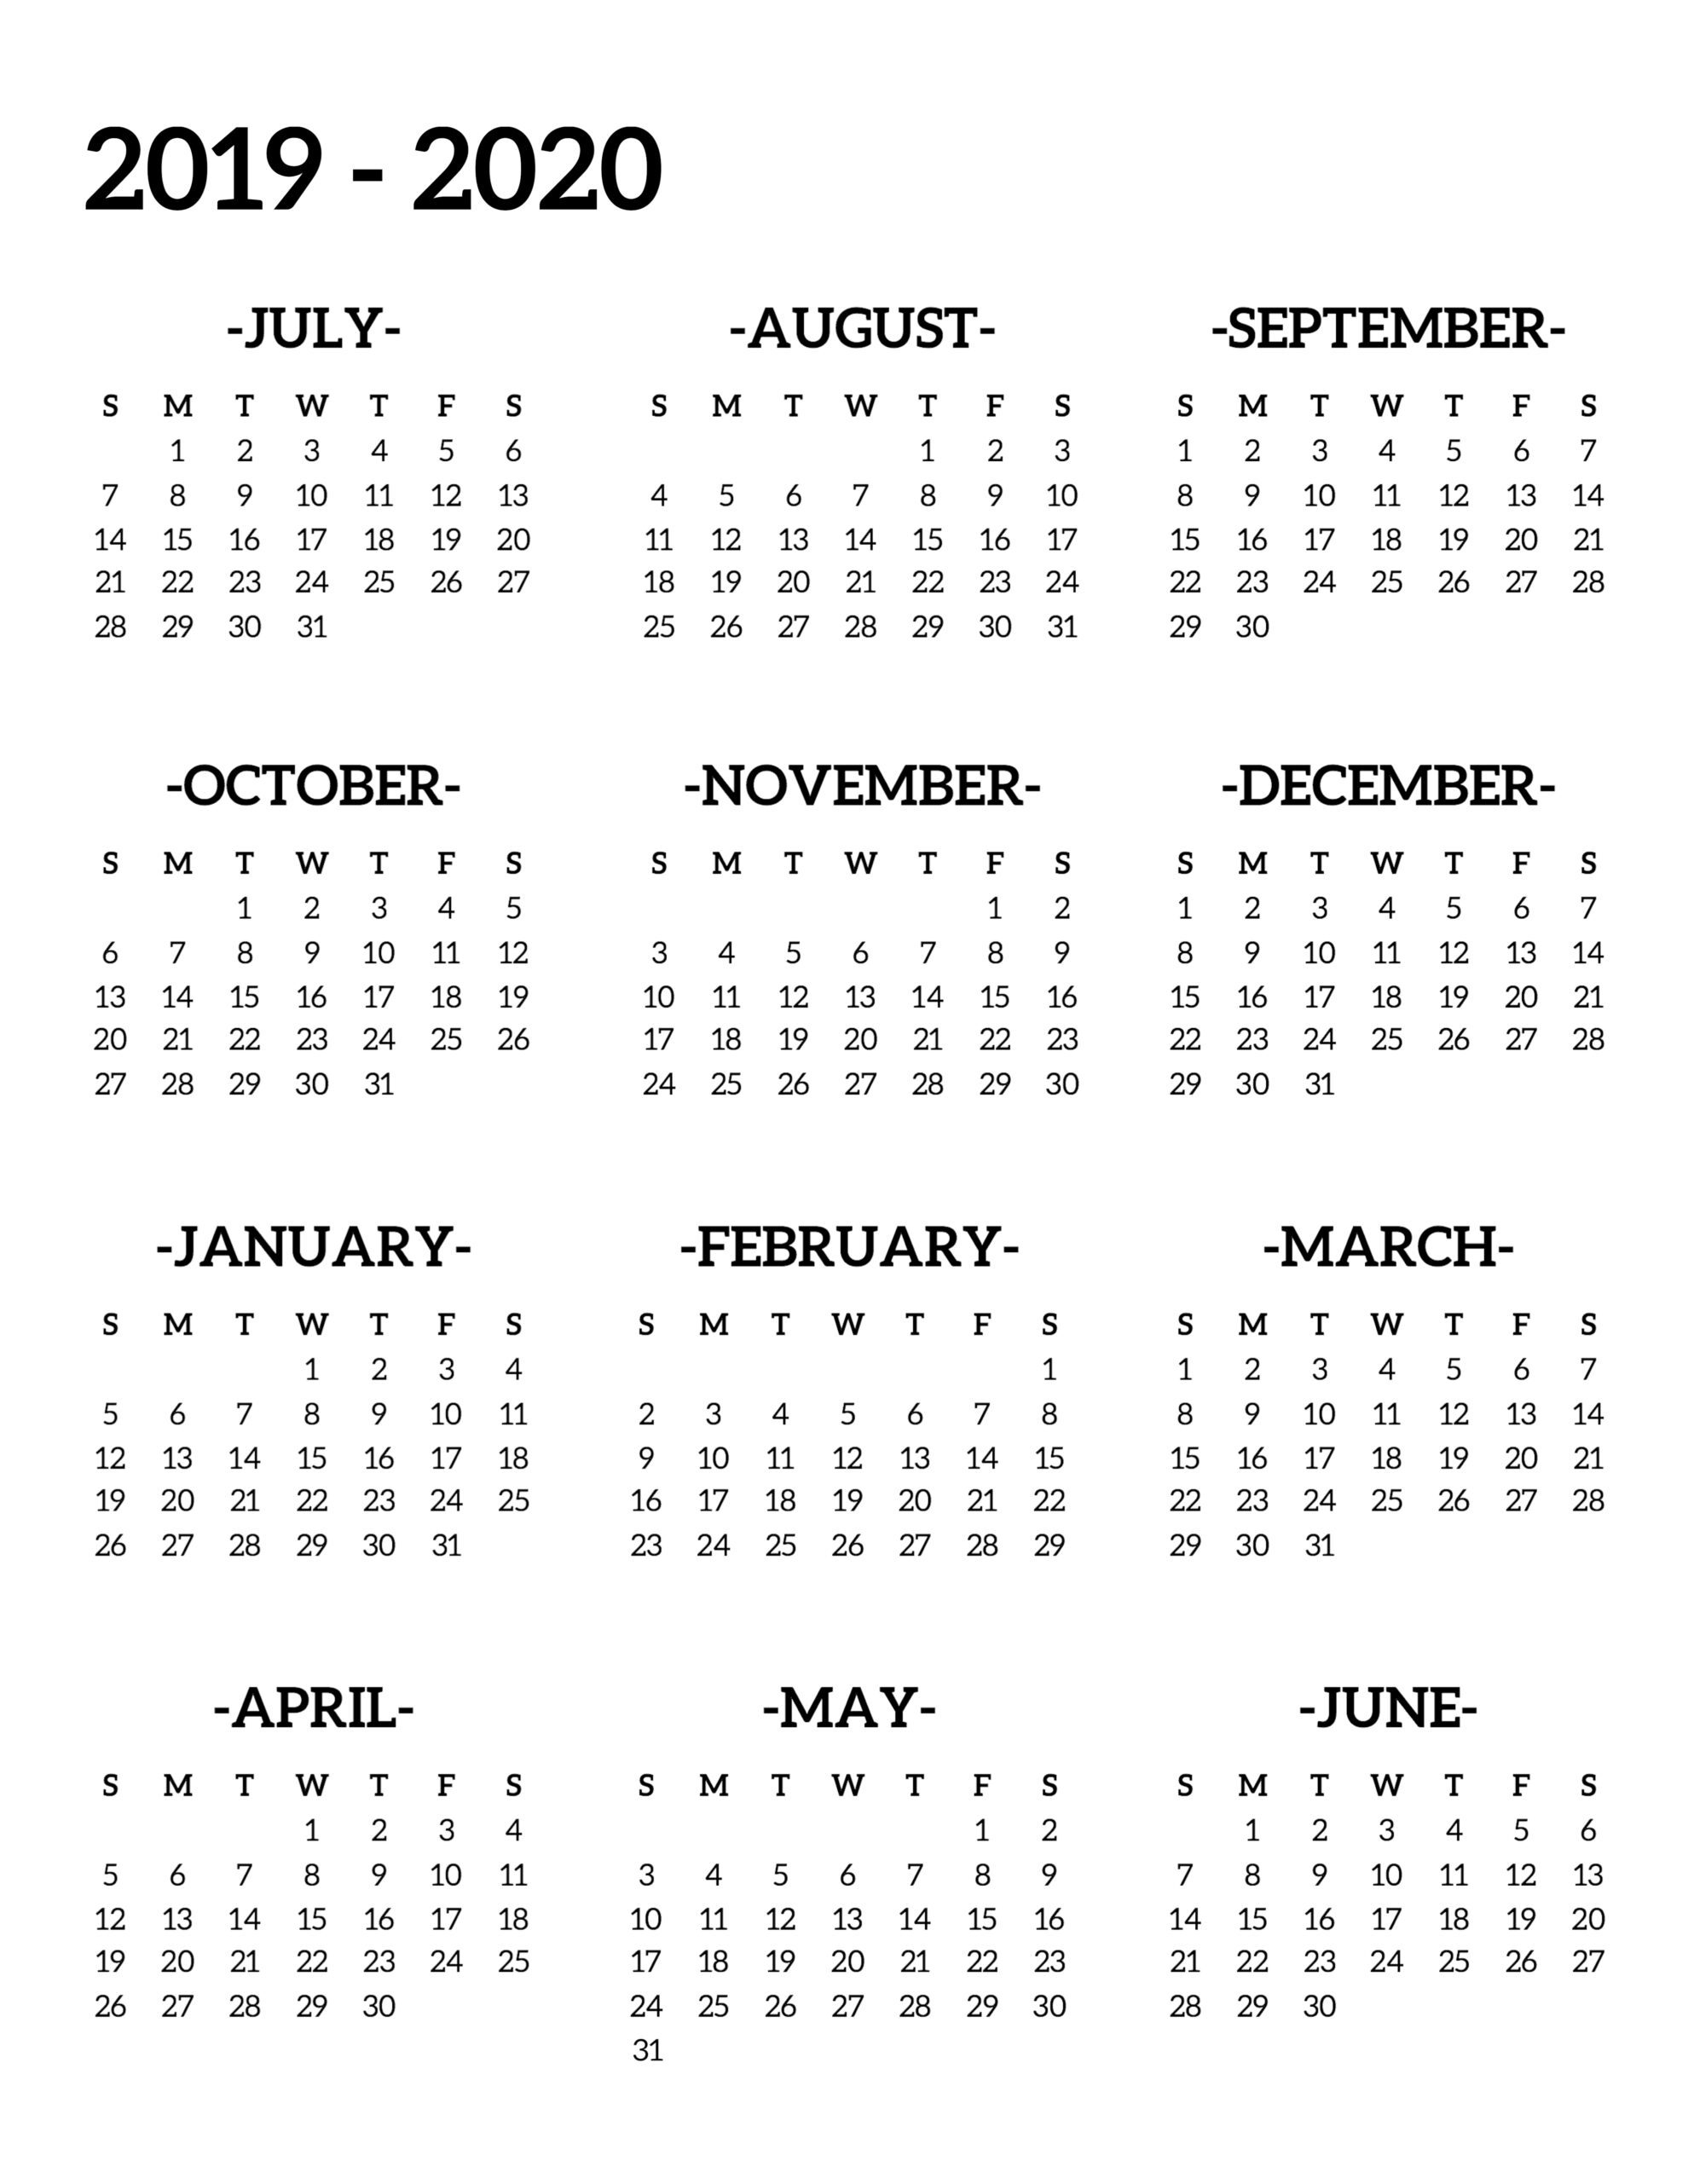 2019-2020 One Page School Calendar Printable - Paper Trail Design regarding Free Calendar July 2019-June 2020